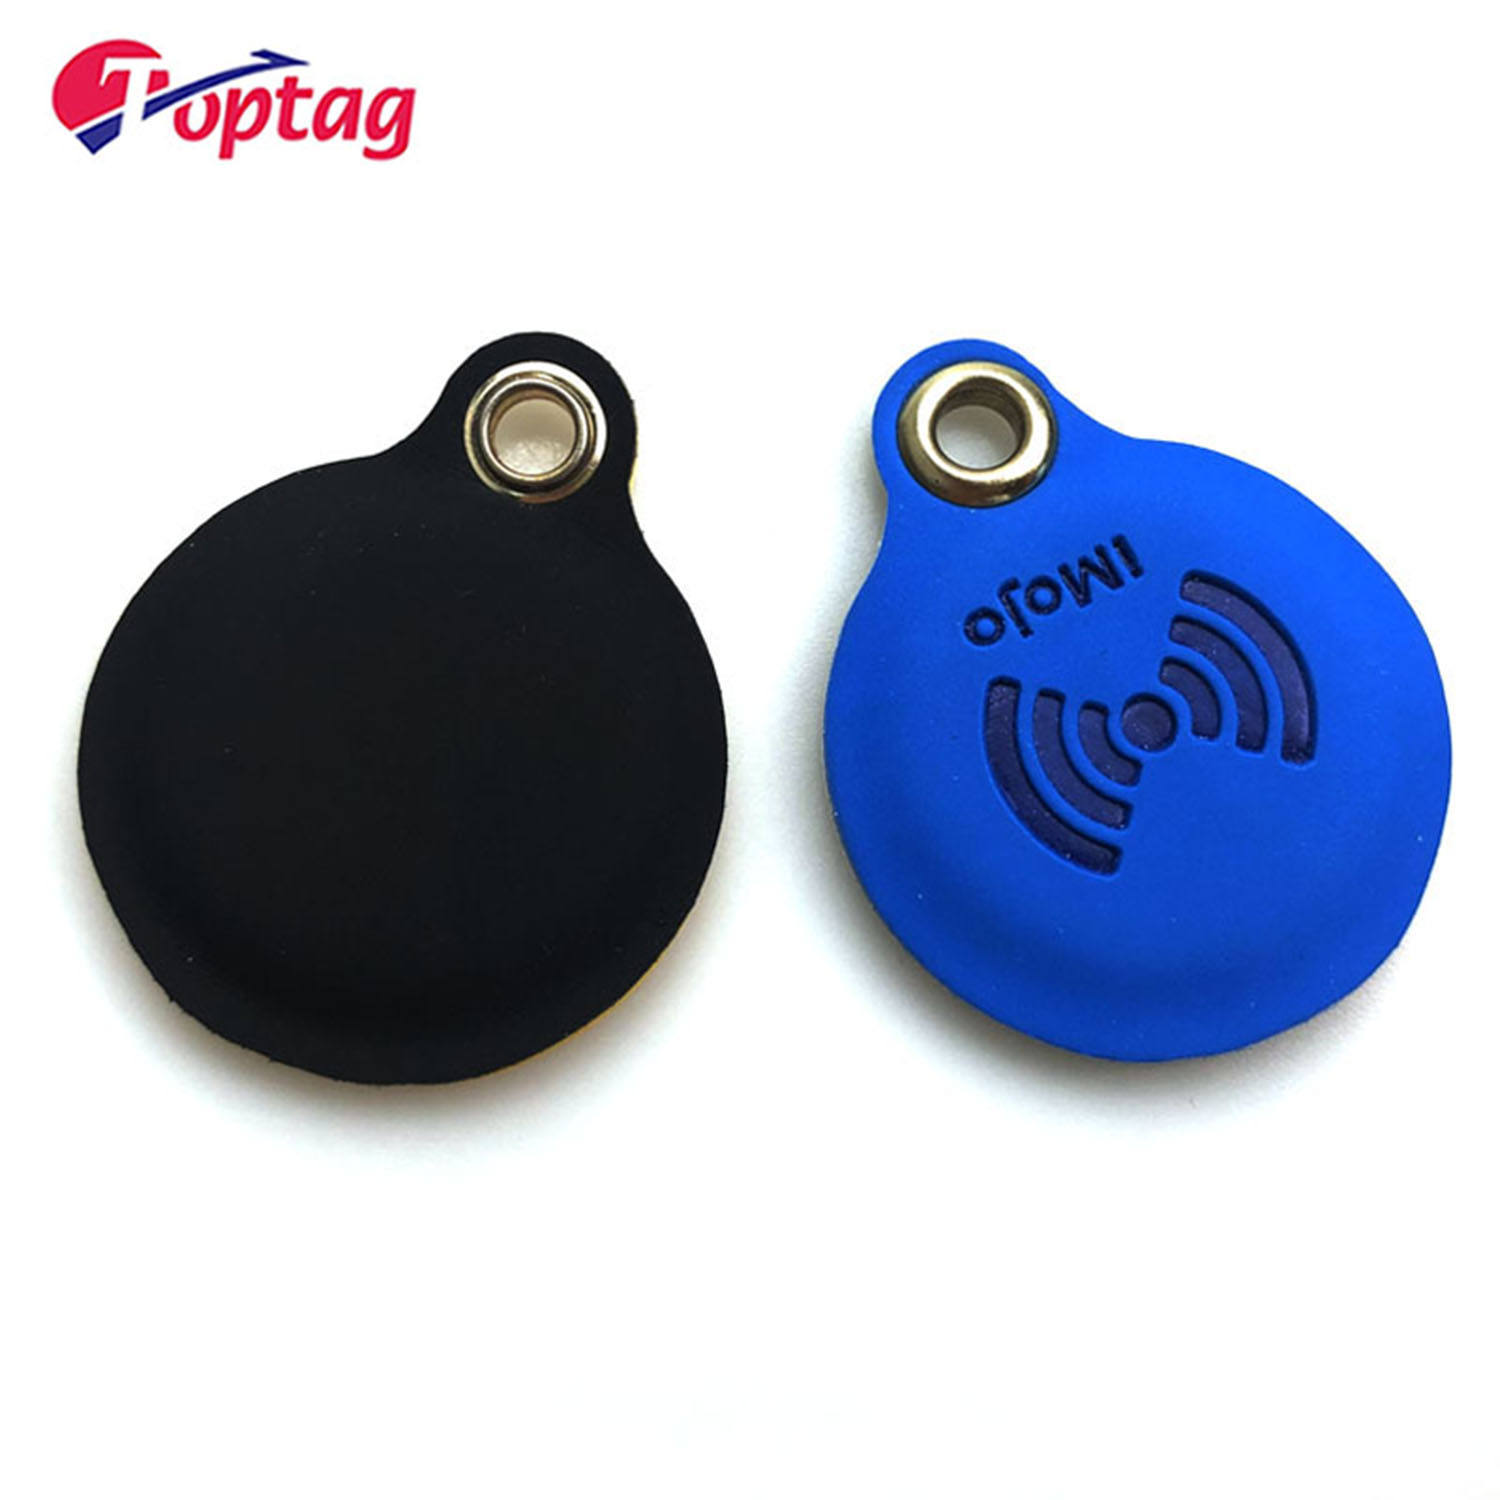 Waterproof RFID PU Leather Key Fob 125Khz 13.56Mhz Key Tag with Metal Ring